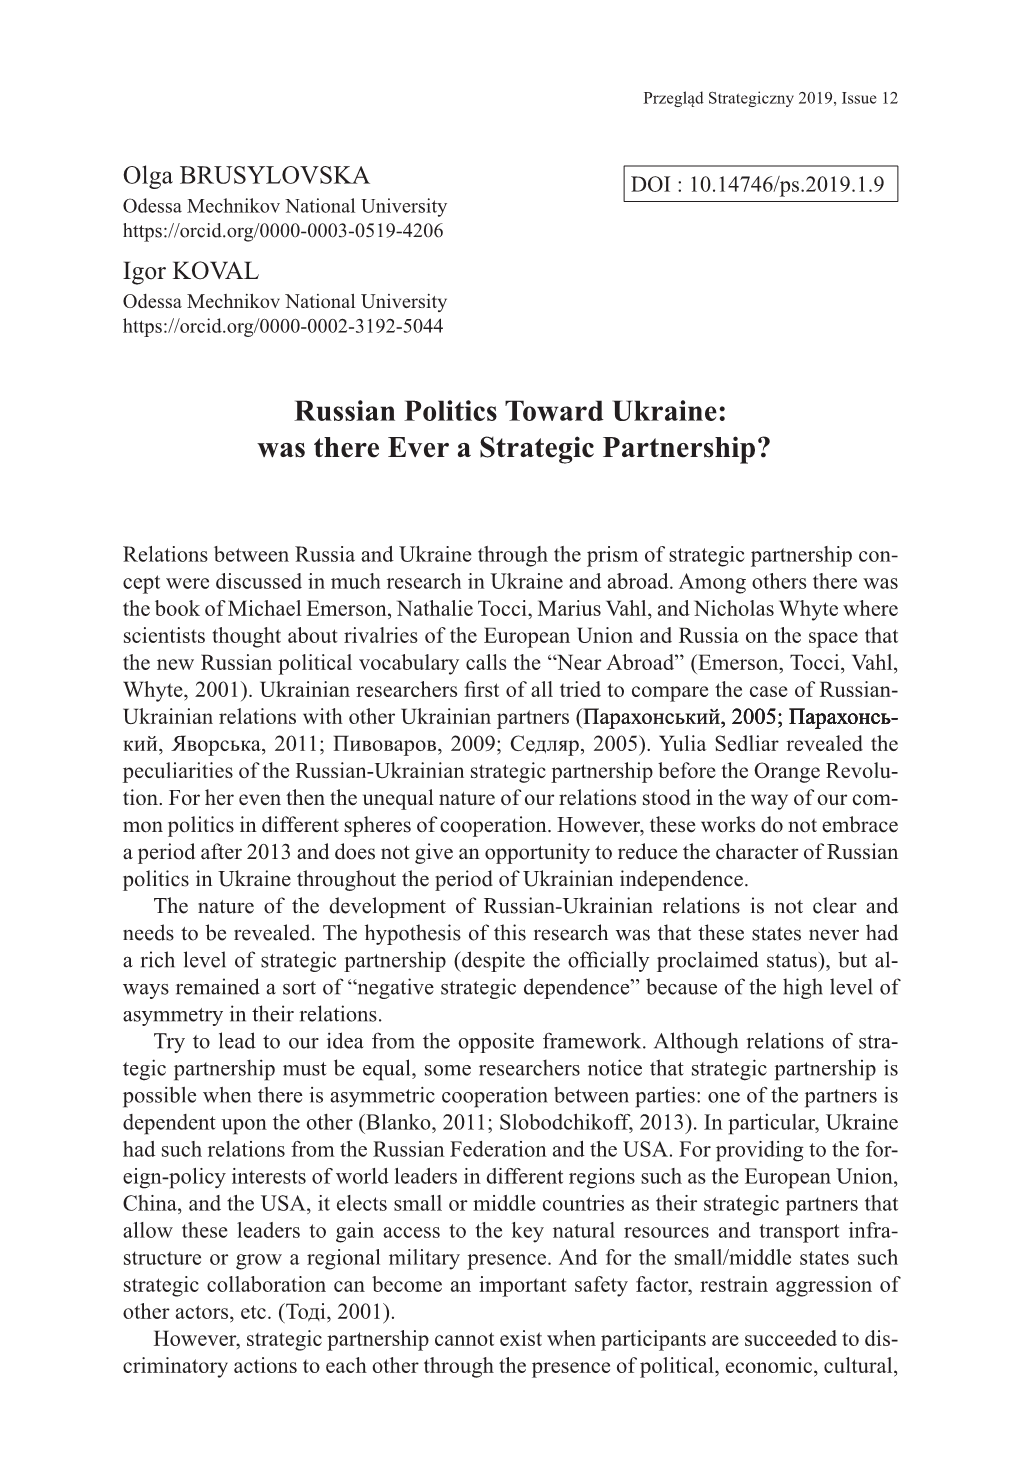 Russian Politics Toward Ukraine: Was There Ever a Strategic Partnership?